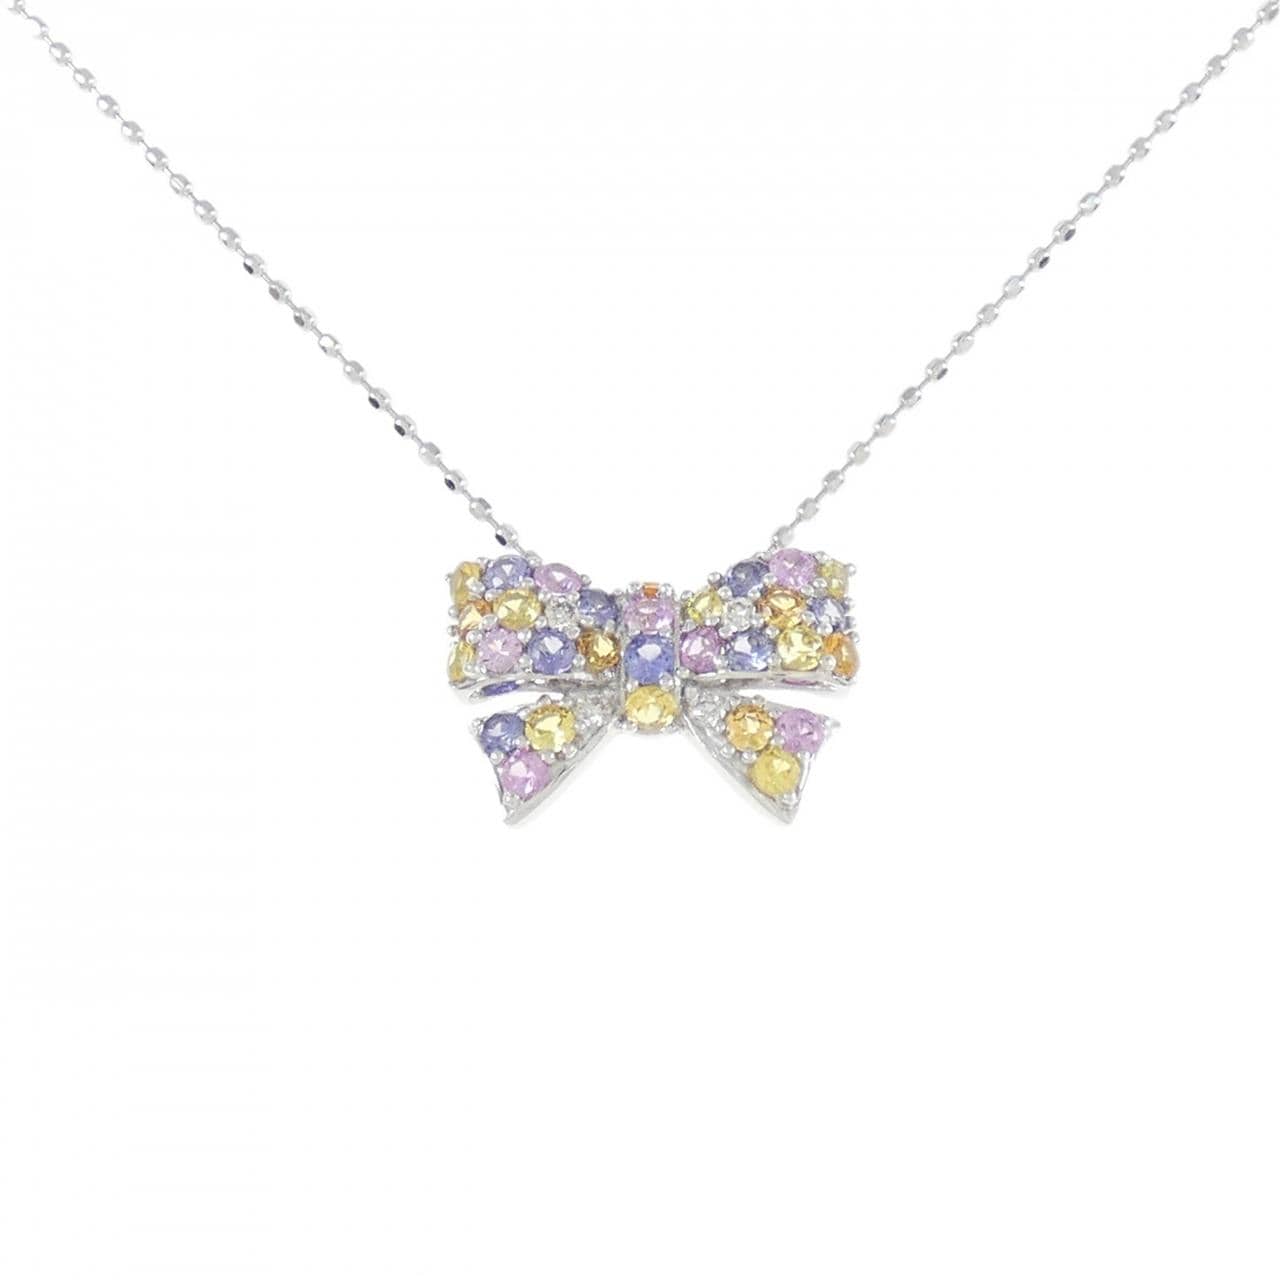 K18WG ribbon sapphire necklace